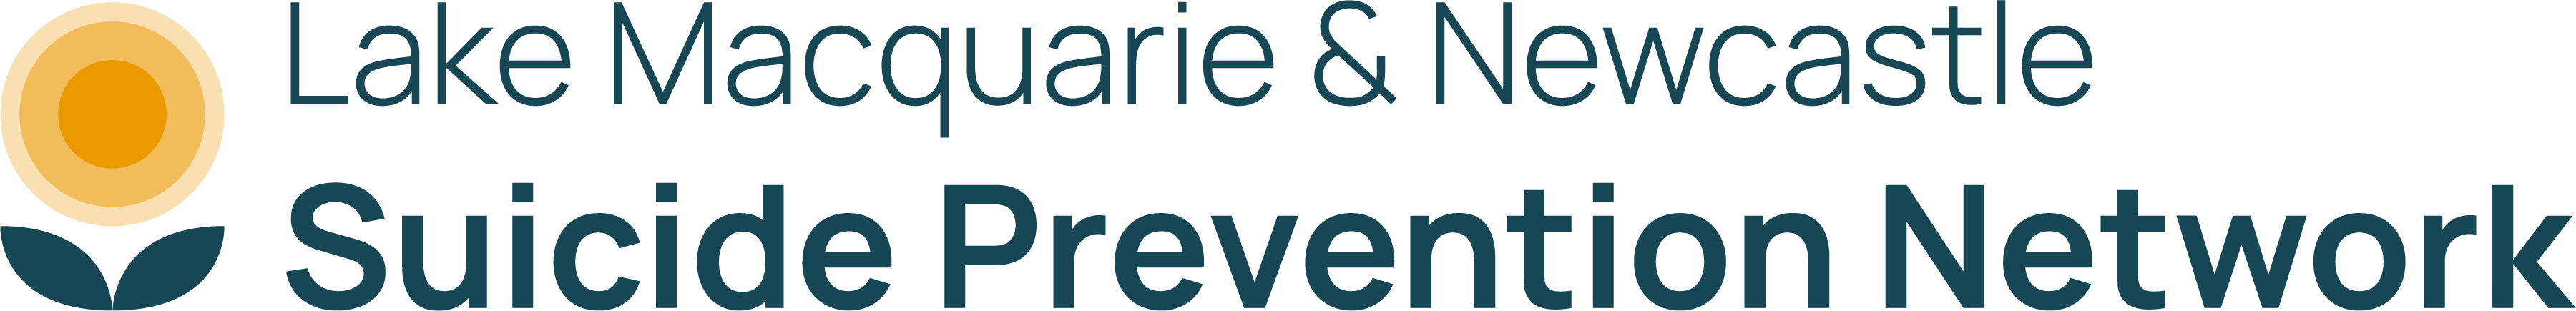 Lake Macquarie and Newcastle Suicide Prevention Network logo